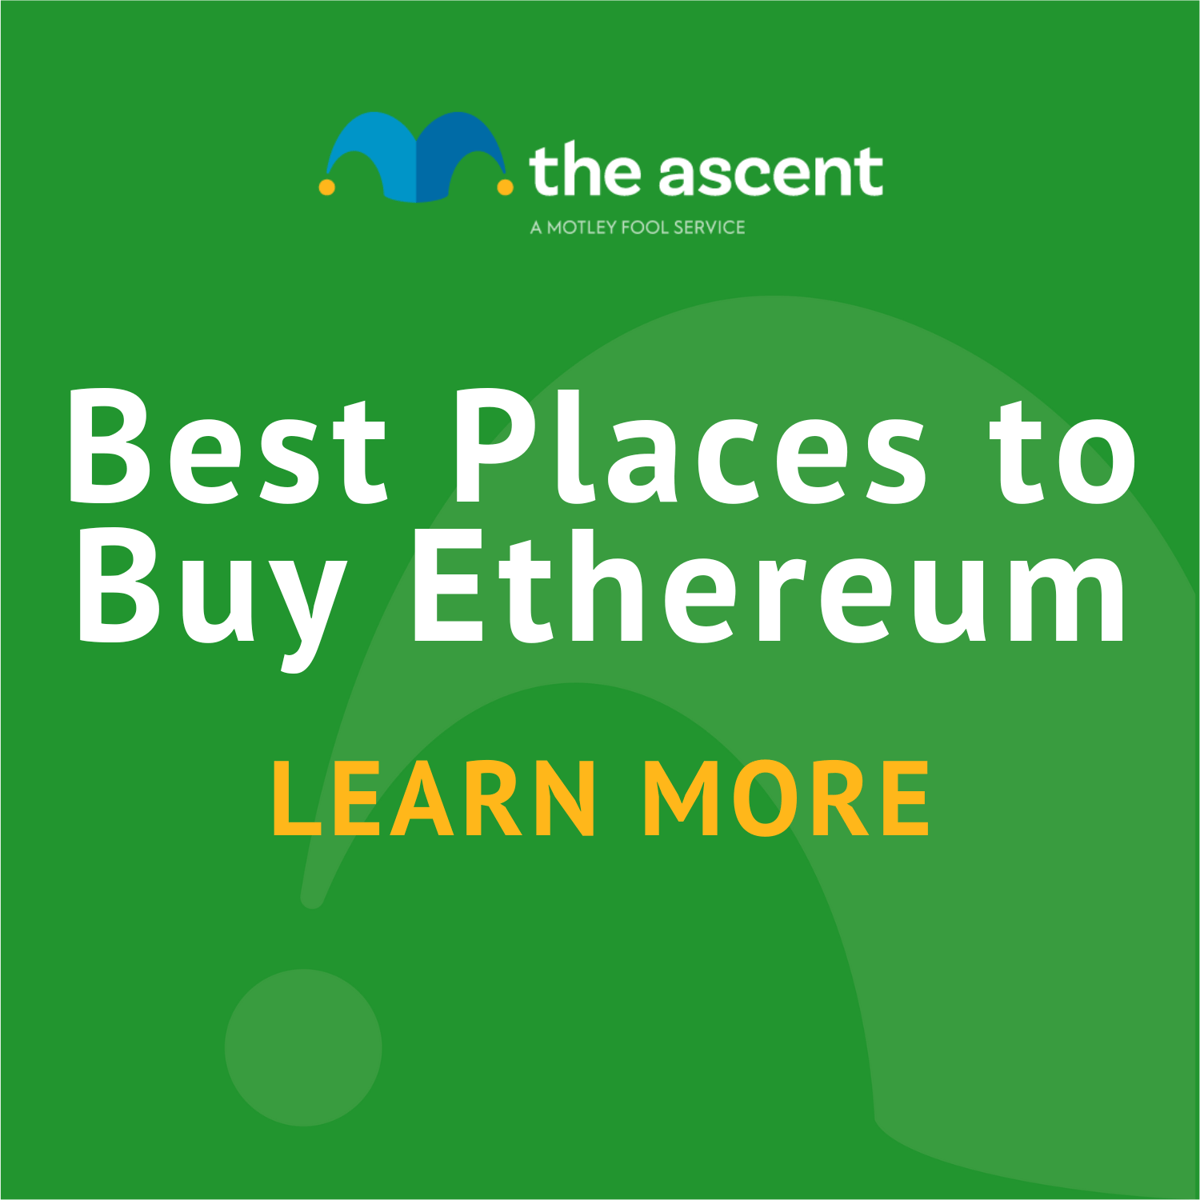 How Do I Buy Ethereum?